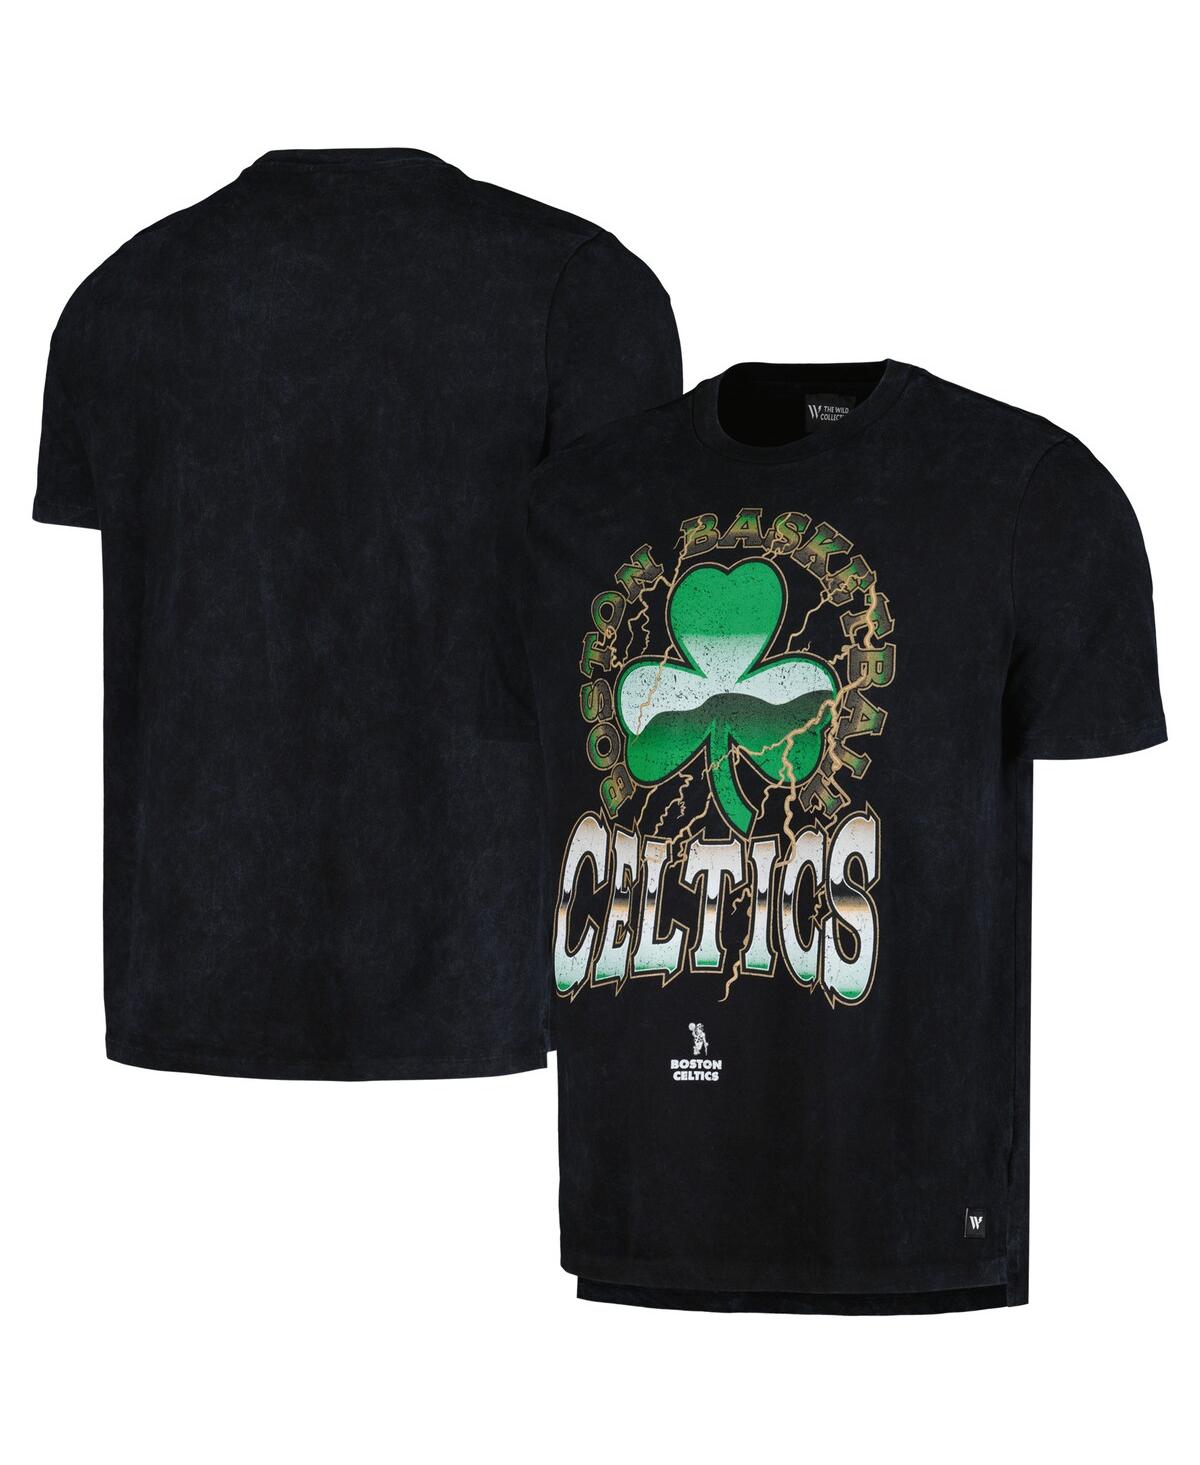 Men's and Women's The Wild Collective Black Distressed Boston Celtics Tour Band T-shirt - Black